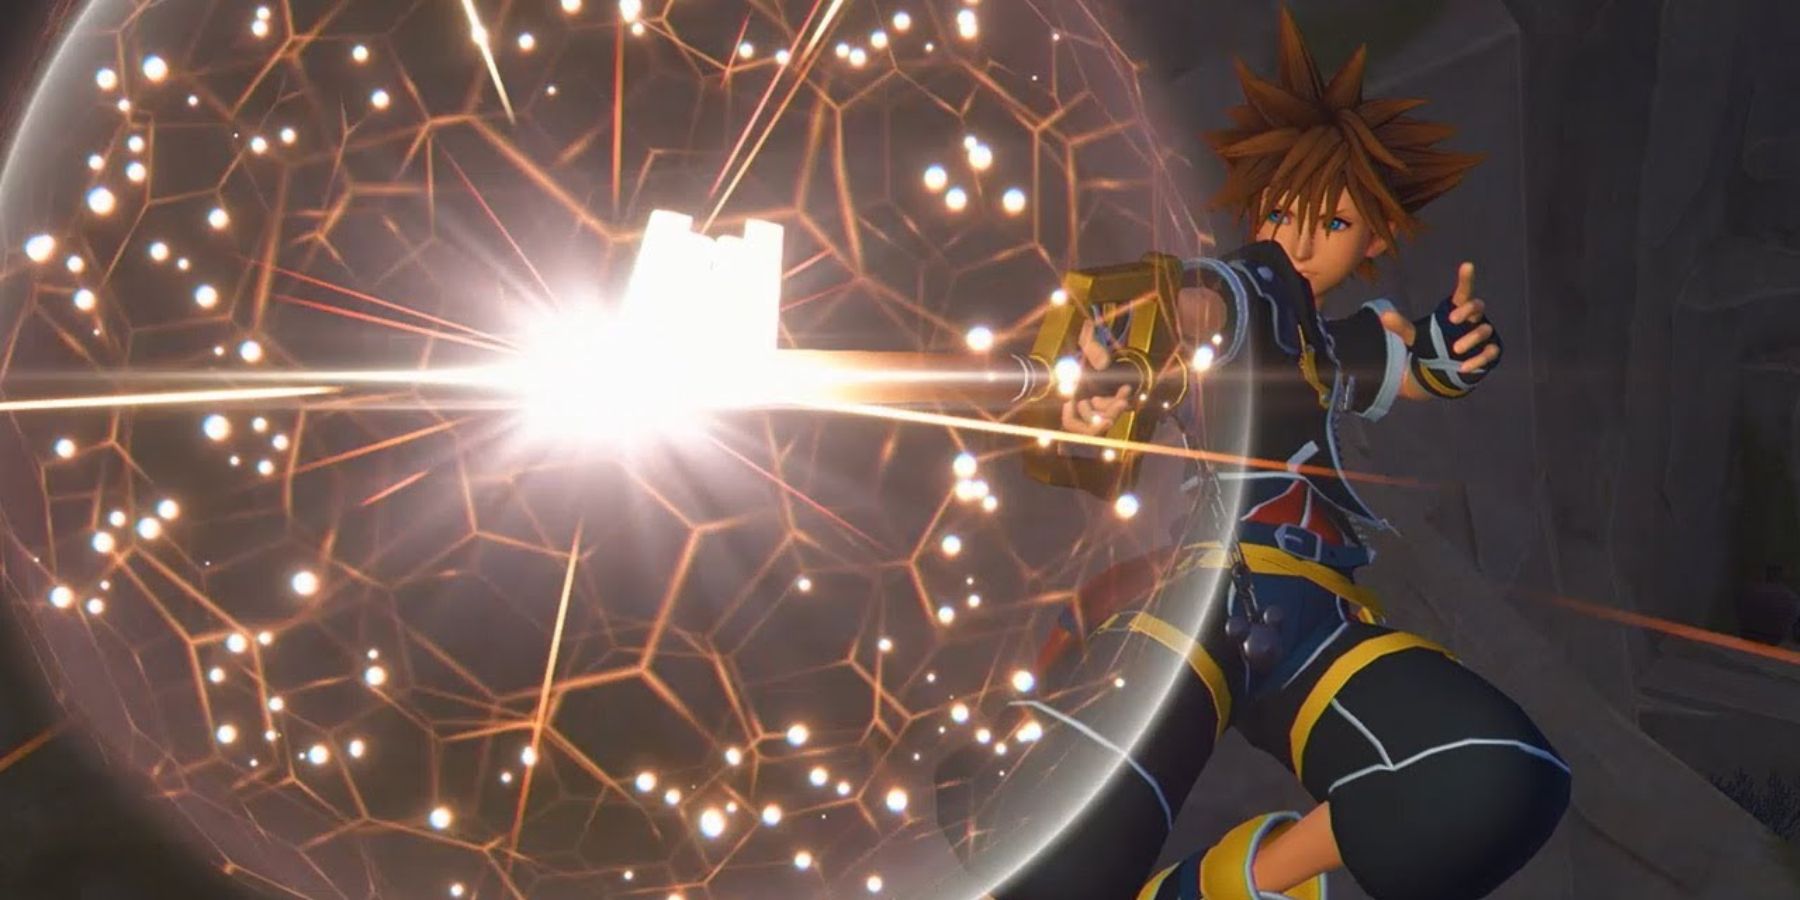 Sora uses his Keyblade in Kingdom Hearts 3